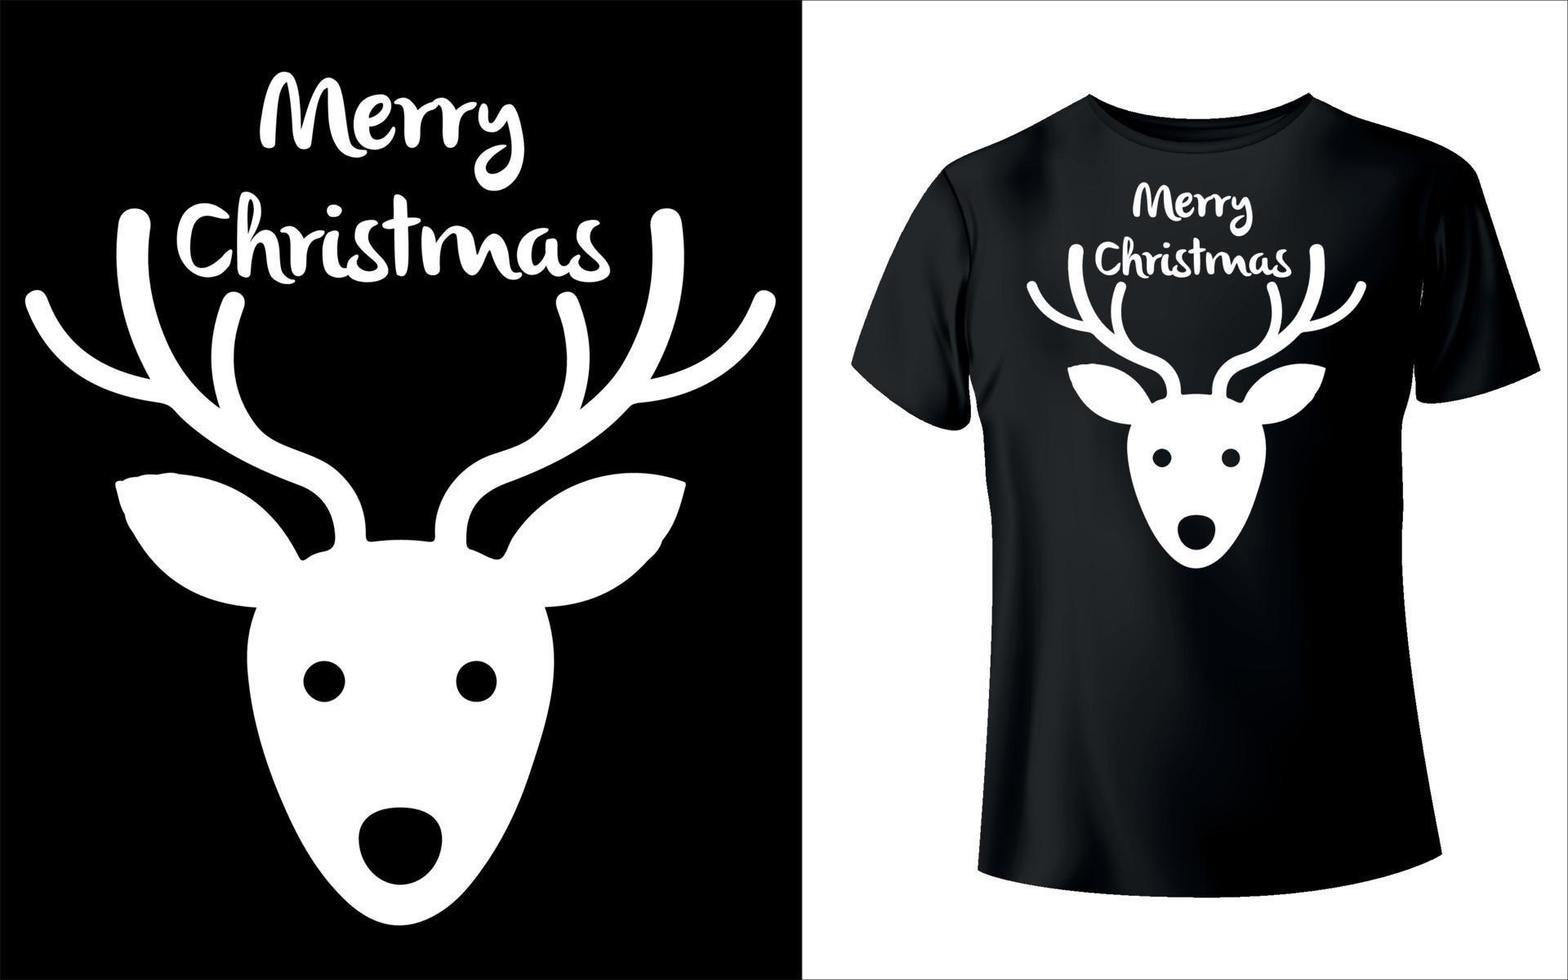 Merry Christmas T-shirt Design with editable vector